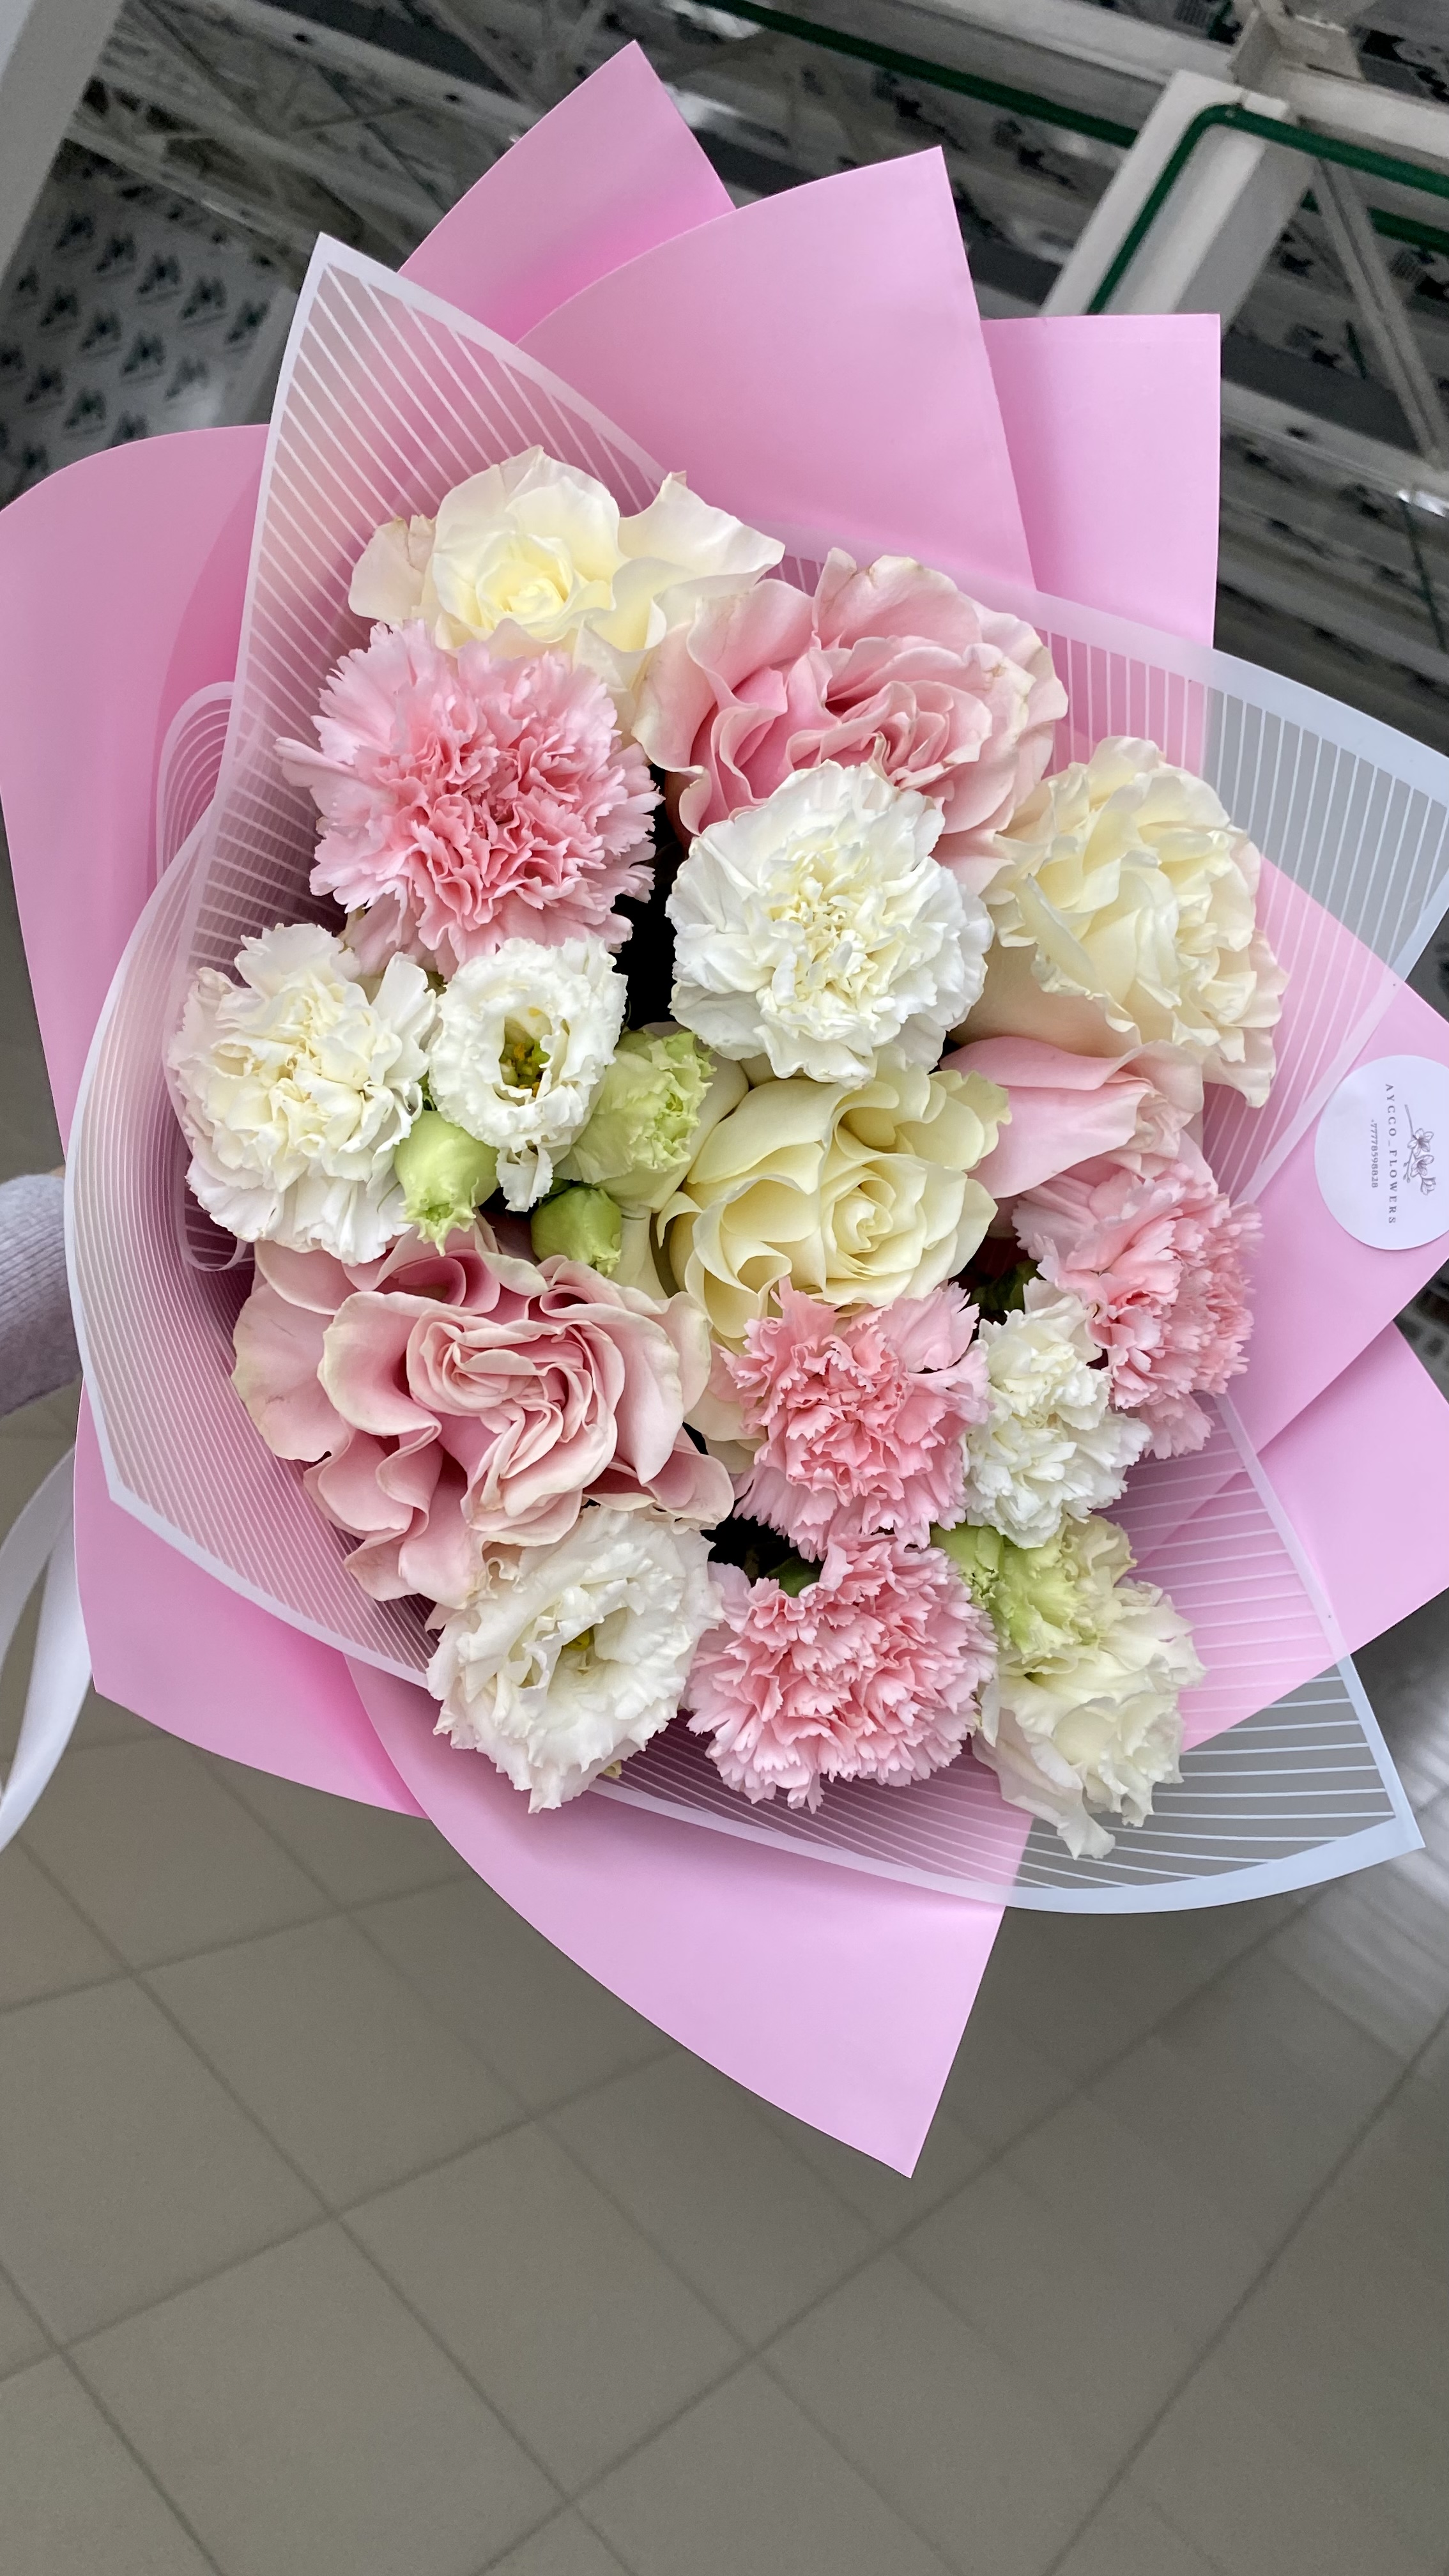 Bouquet of Life flowers delivered to Uralsk